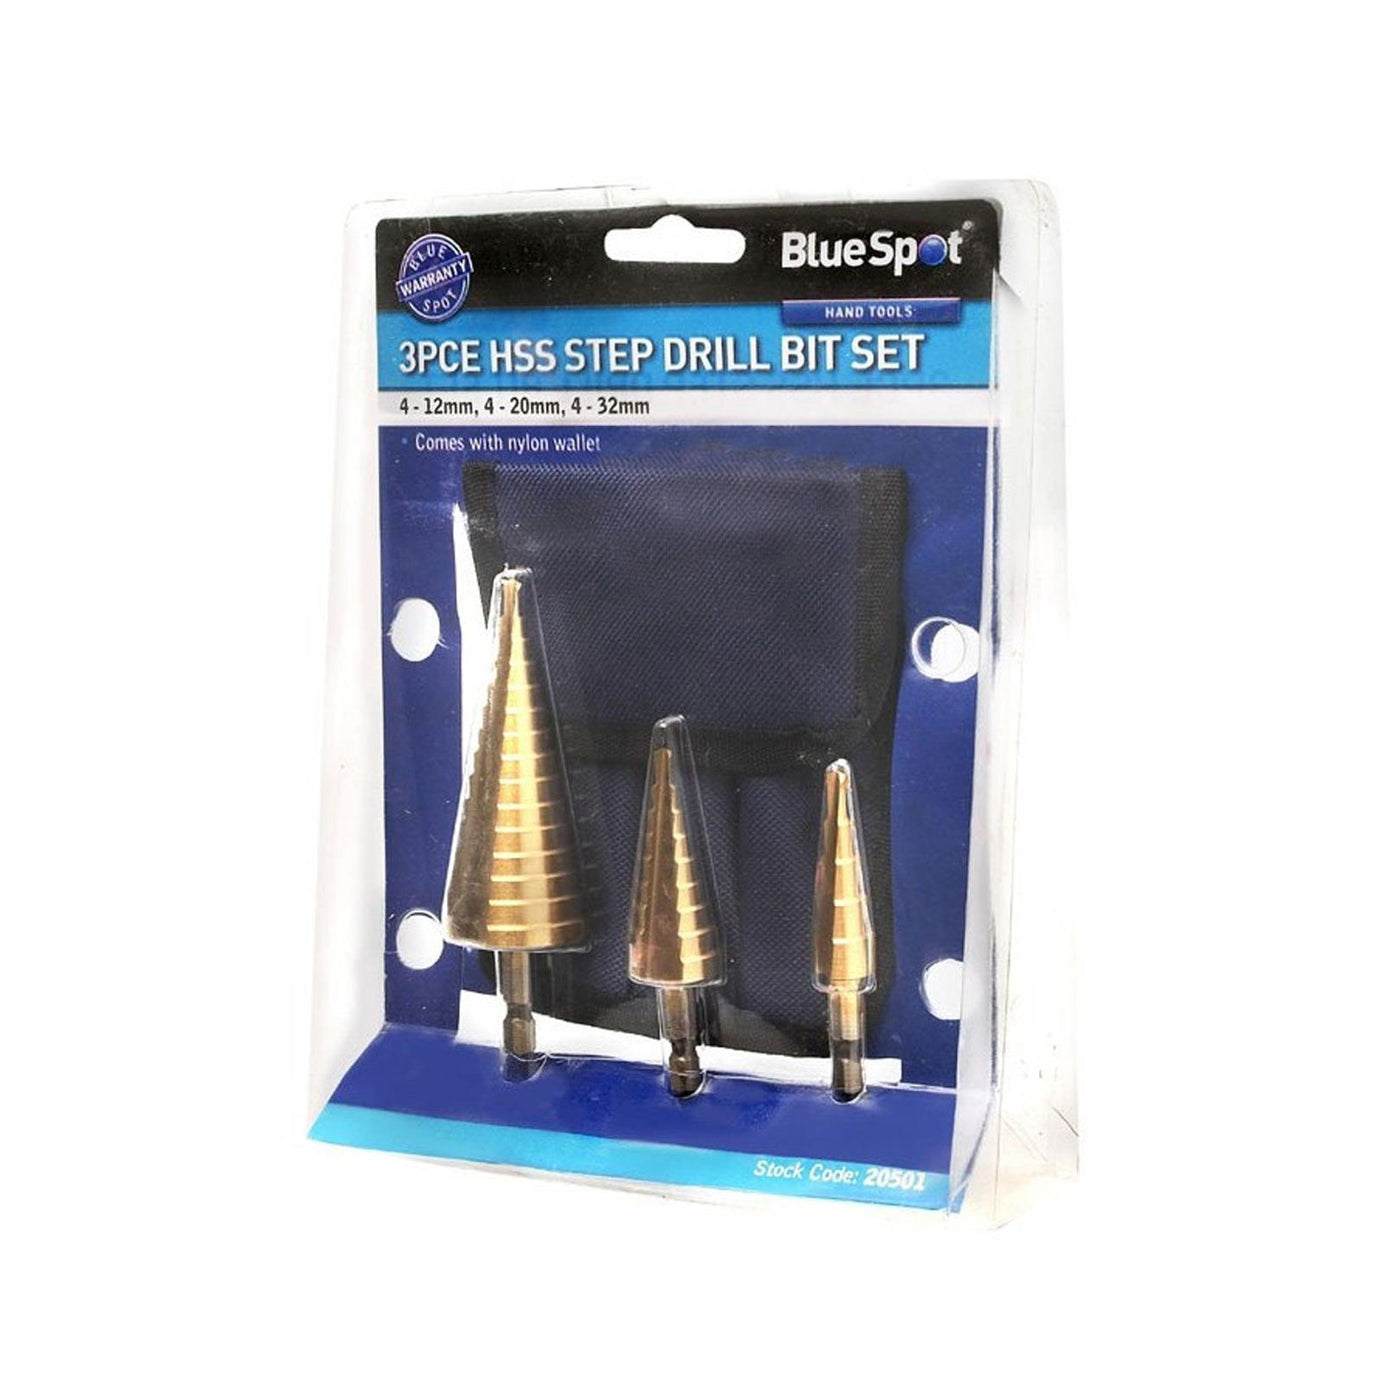 BlueSpot 3Pce HSS Hex Shank Tap Drill Bits Metric Thread (4-32mm) Screw Compound Set